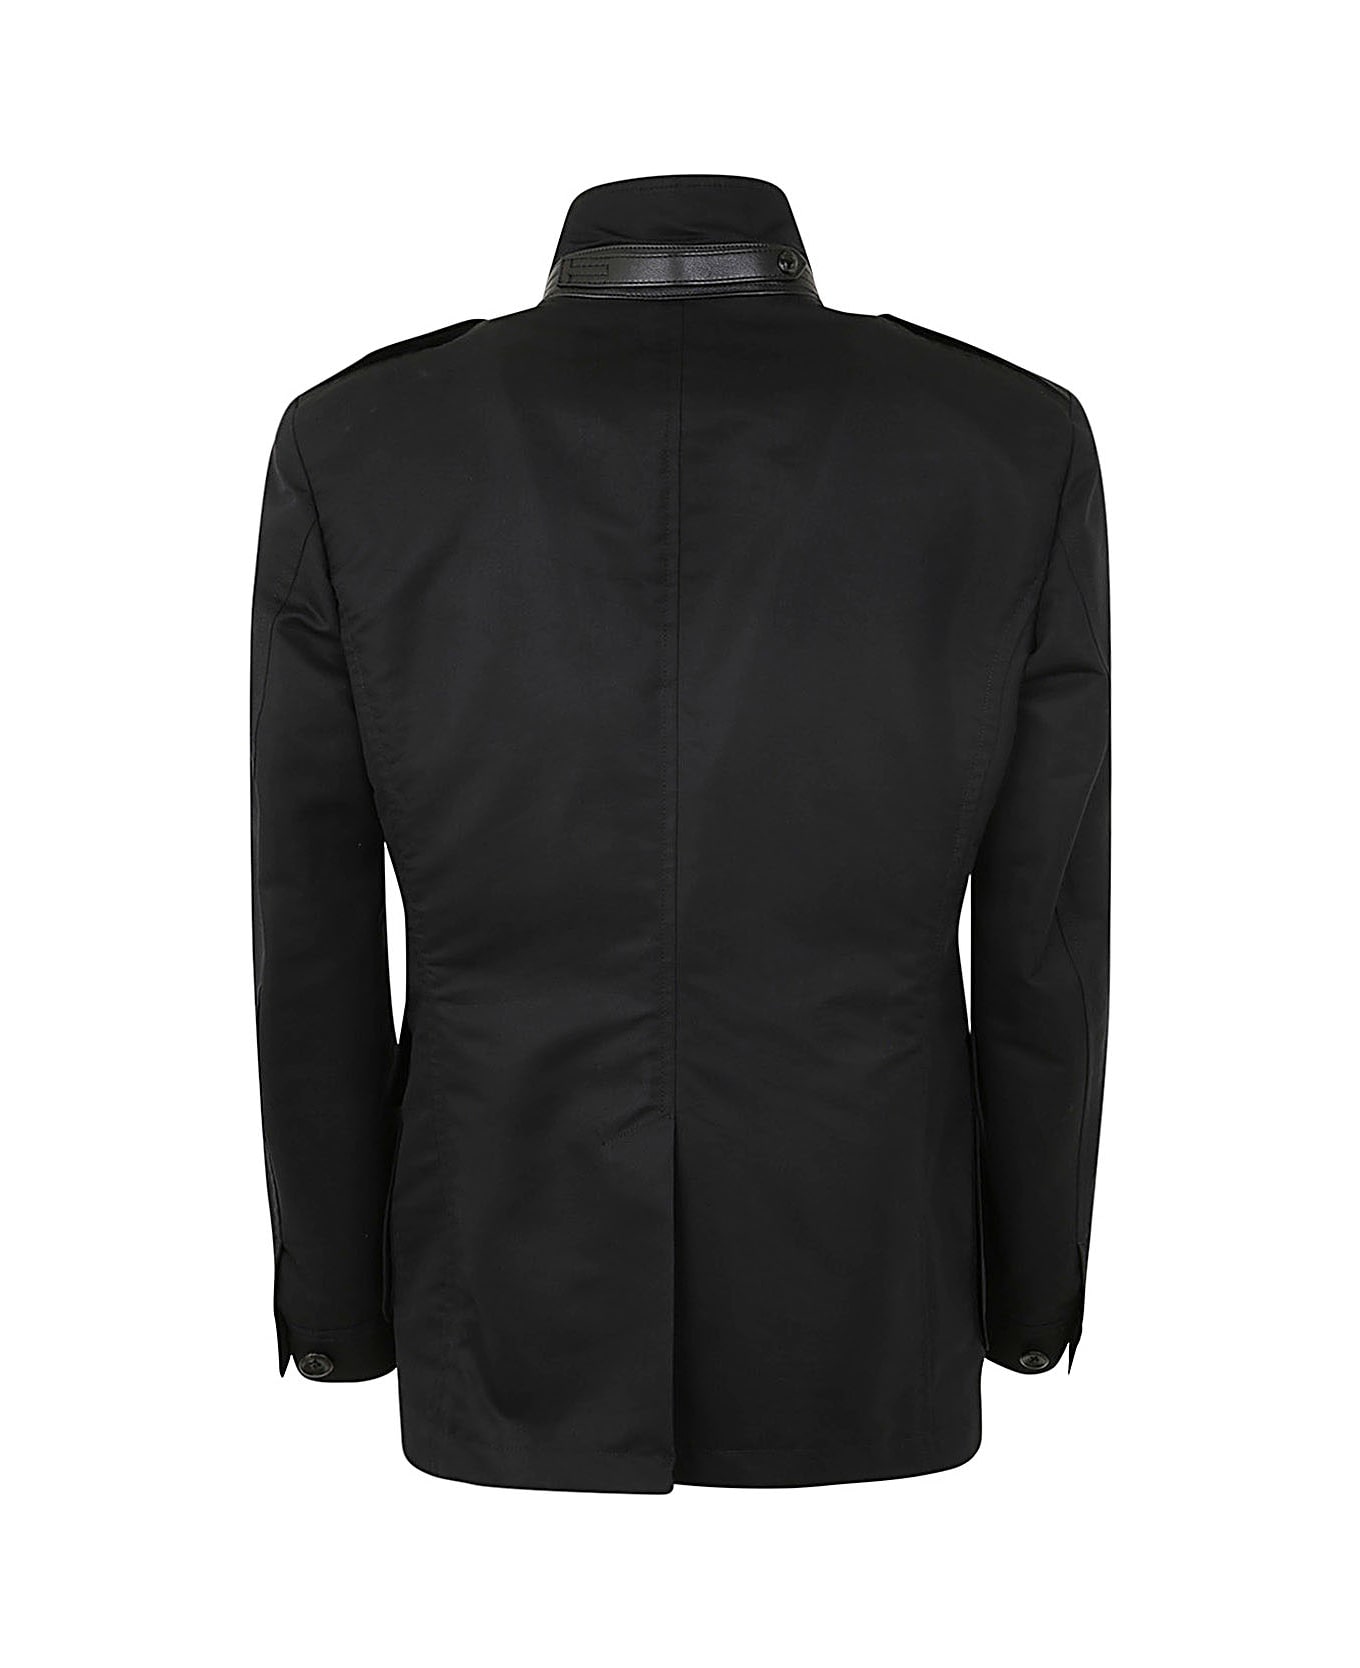 Tom Ford Outwear Jacket - Black